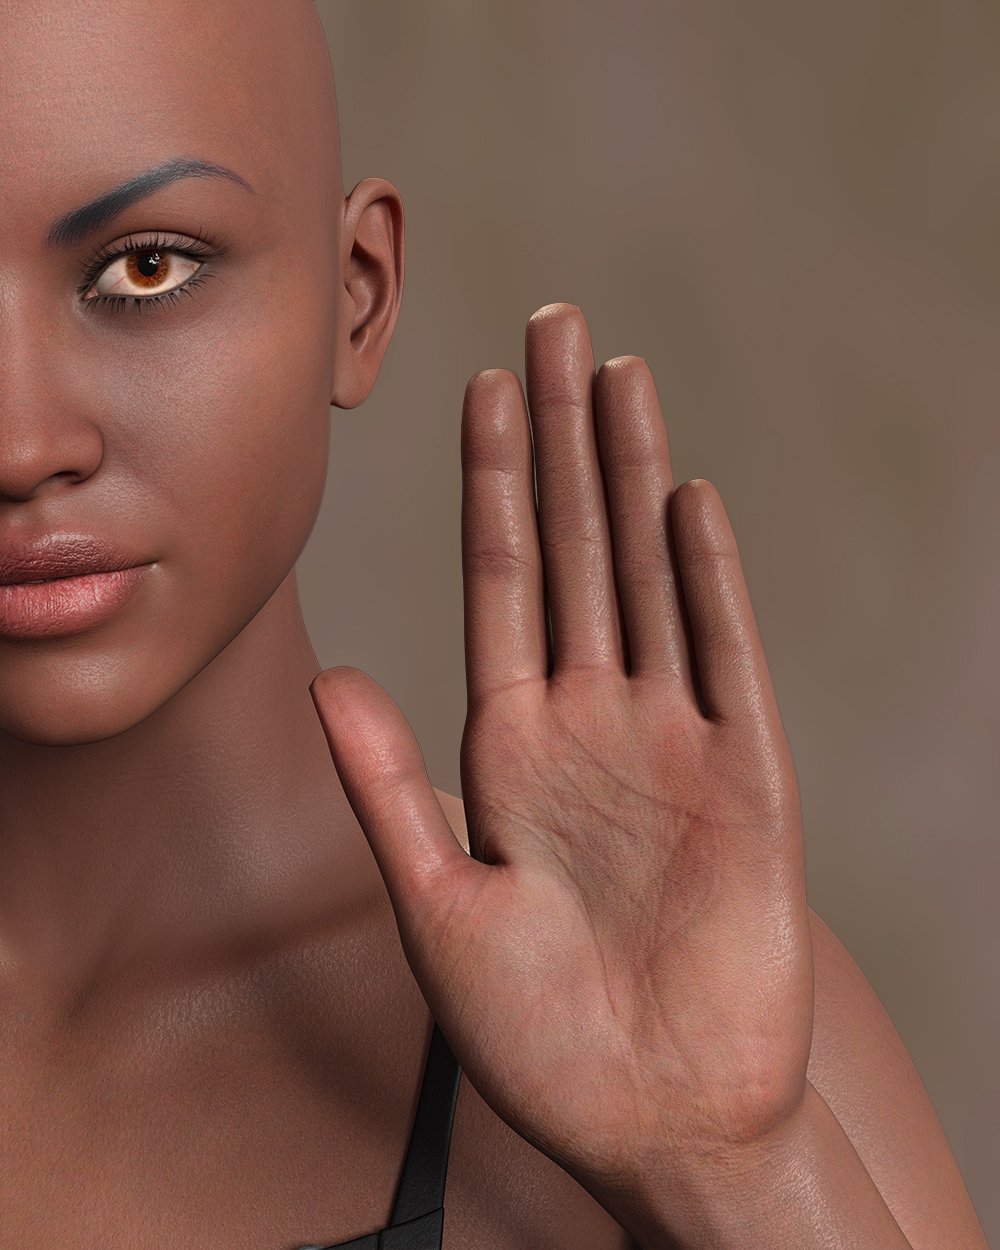 TMHL Dark Skin Merchant Resource for Genesis 8.1 Female by: TwiztedMetalhotlilme74, 3D Models by Daz 3D